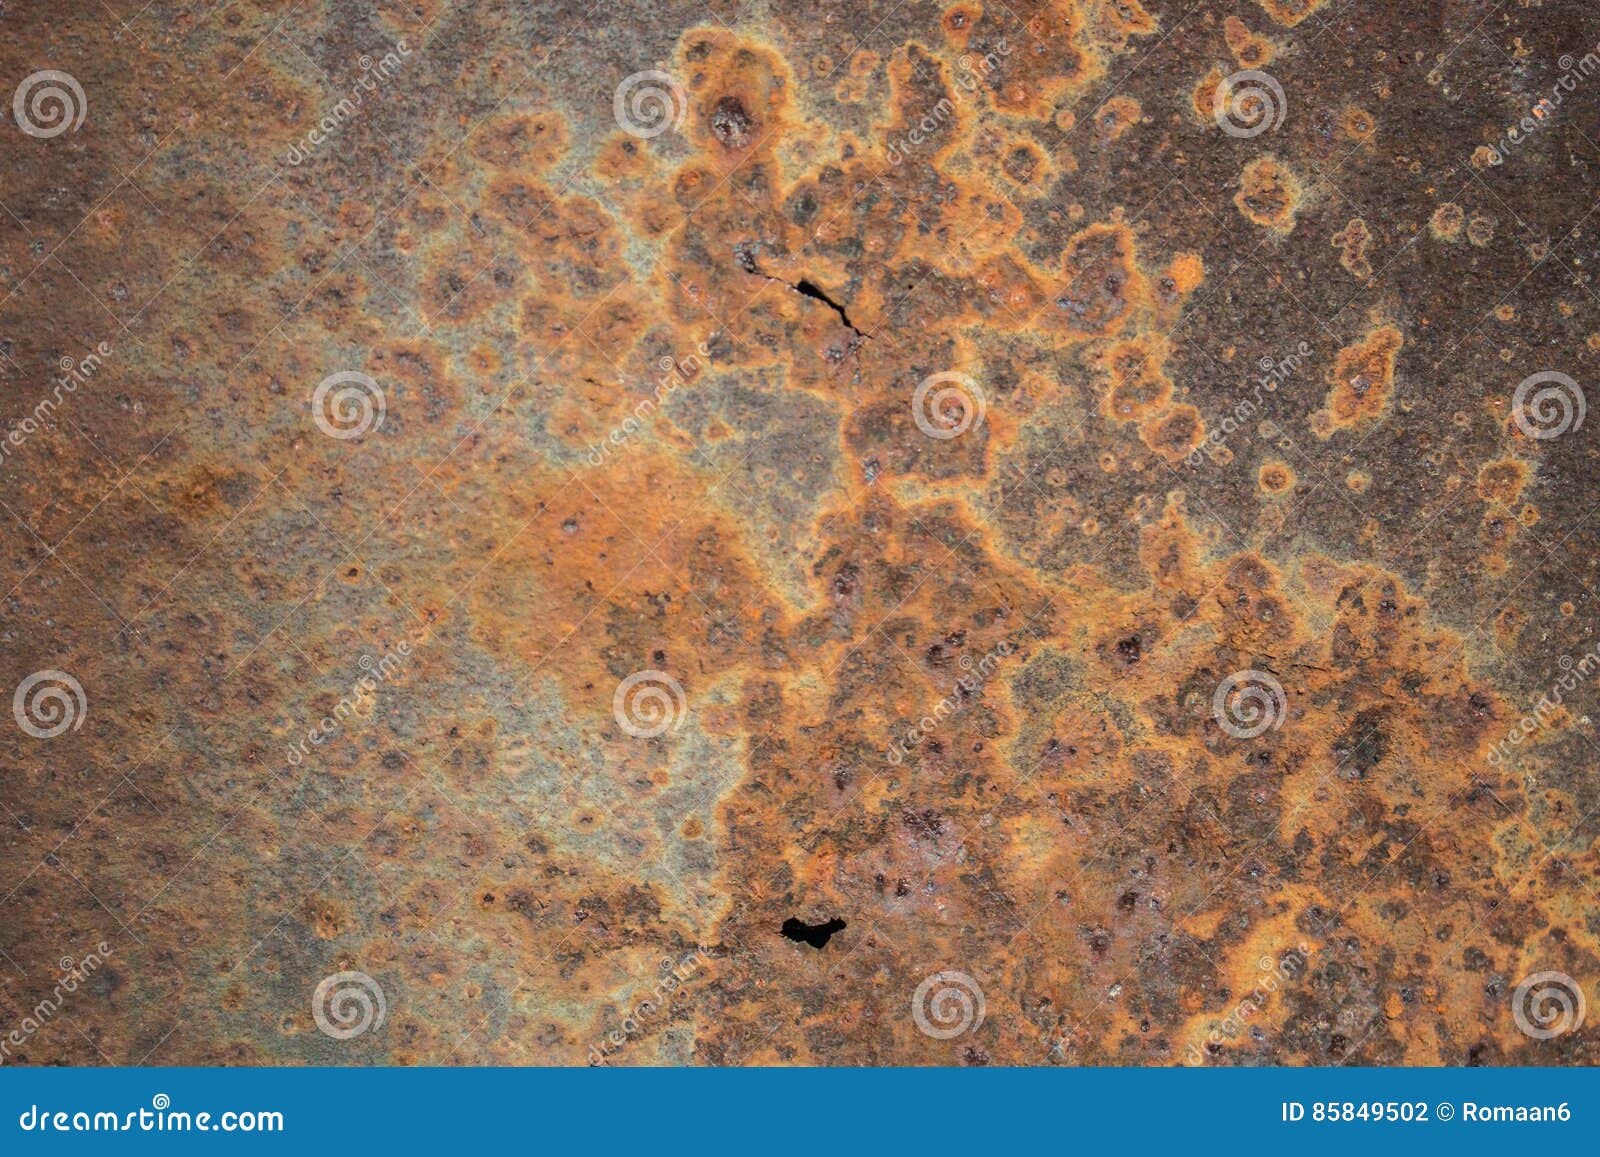 Can sheet metal rust фото 61